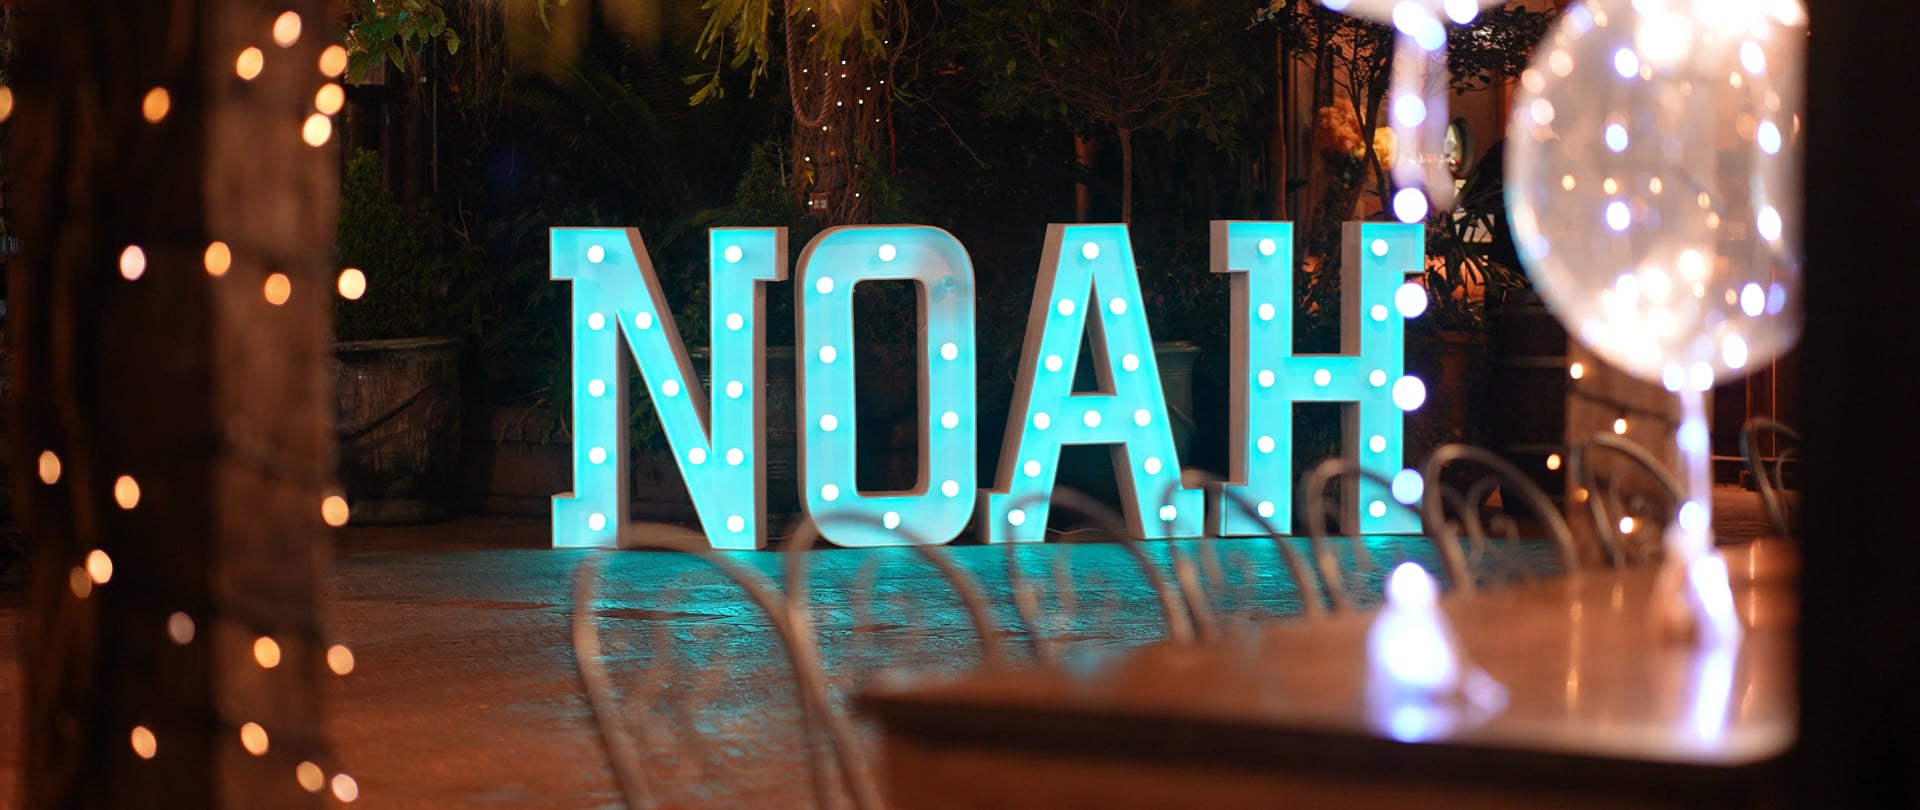 Noah’s Bar Mitzvah Wedding Video Filmed atSydney,New South Wales